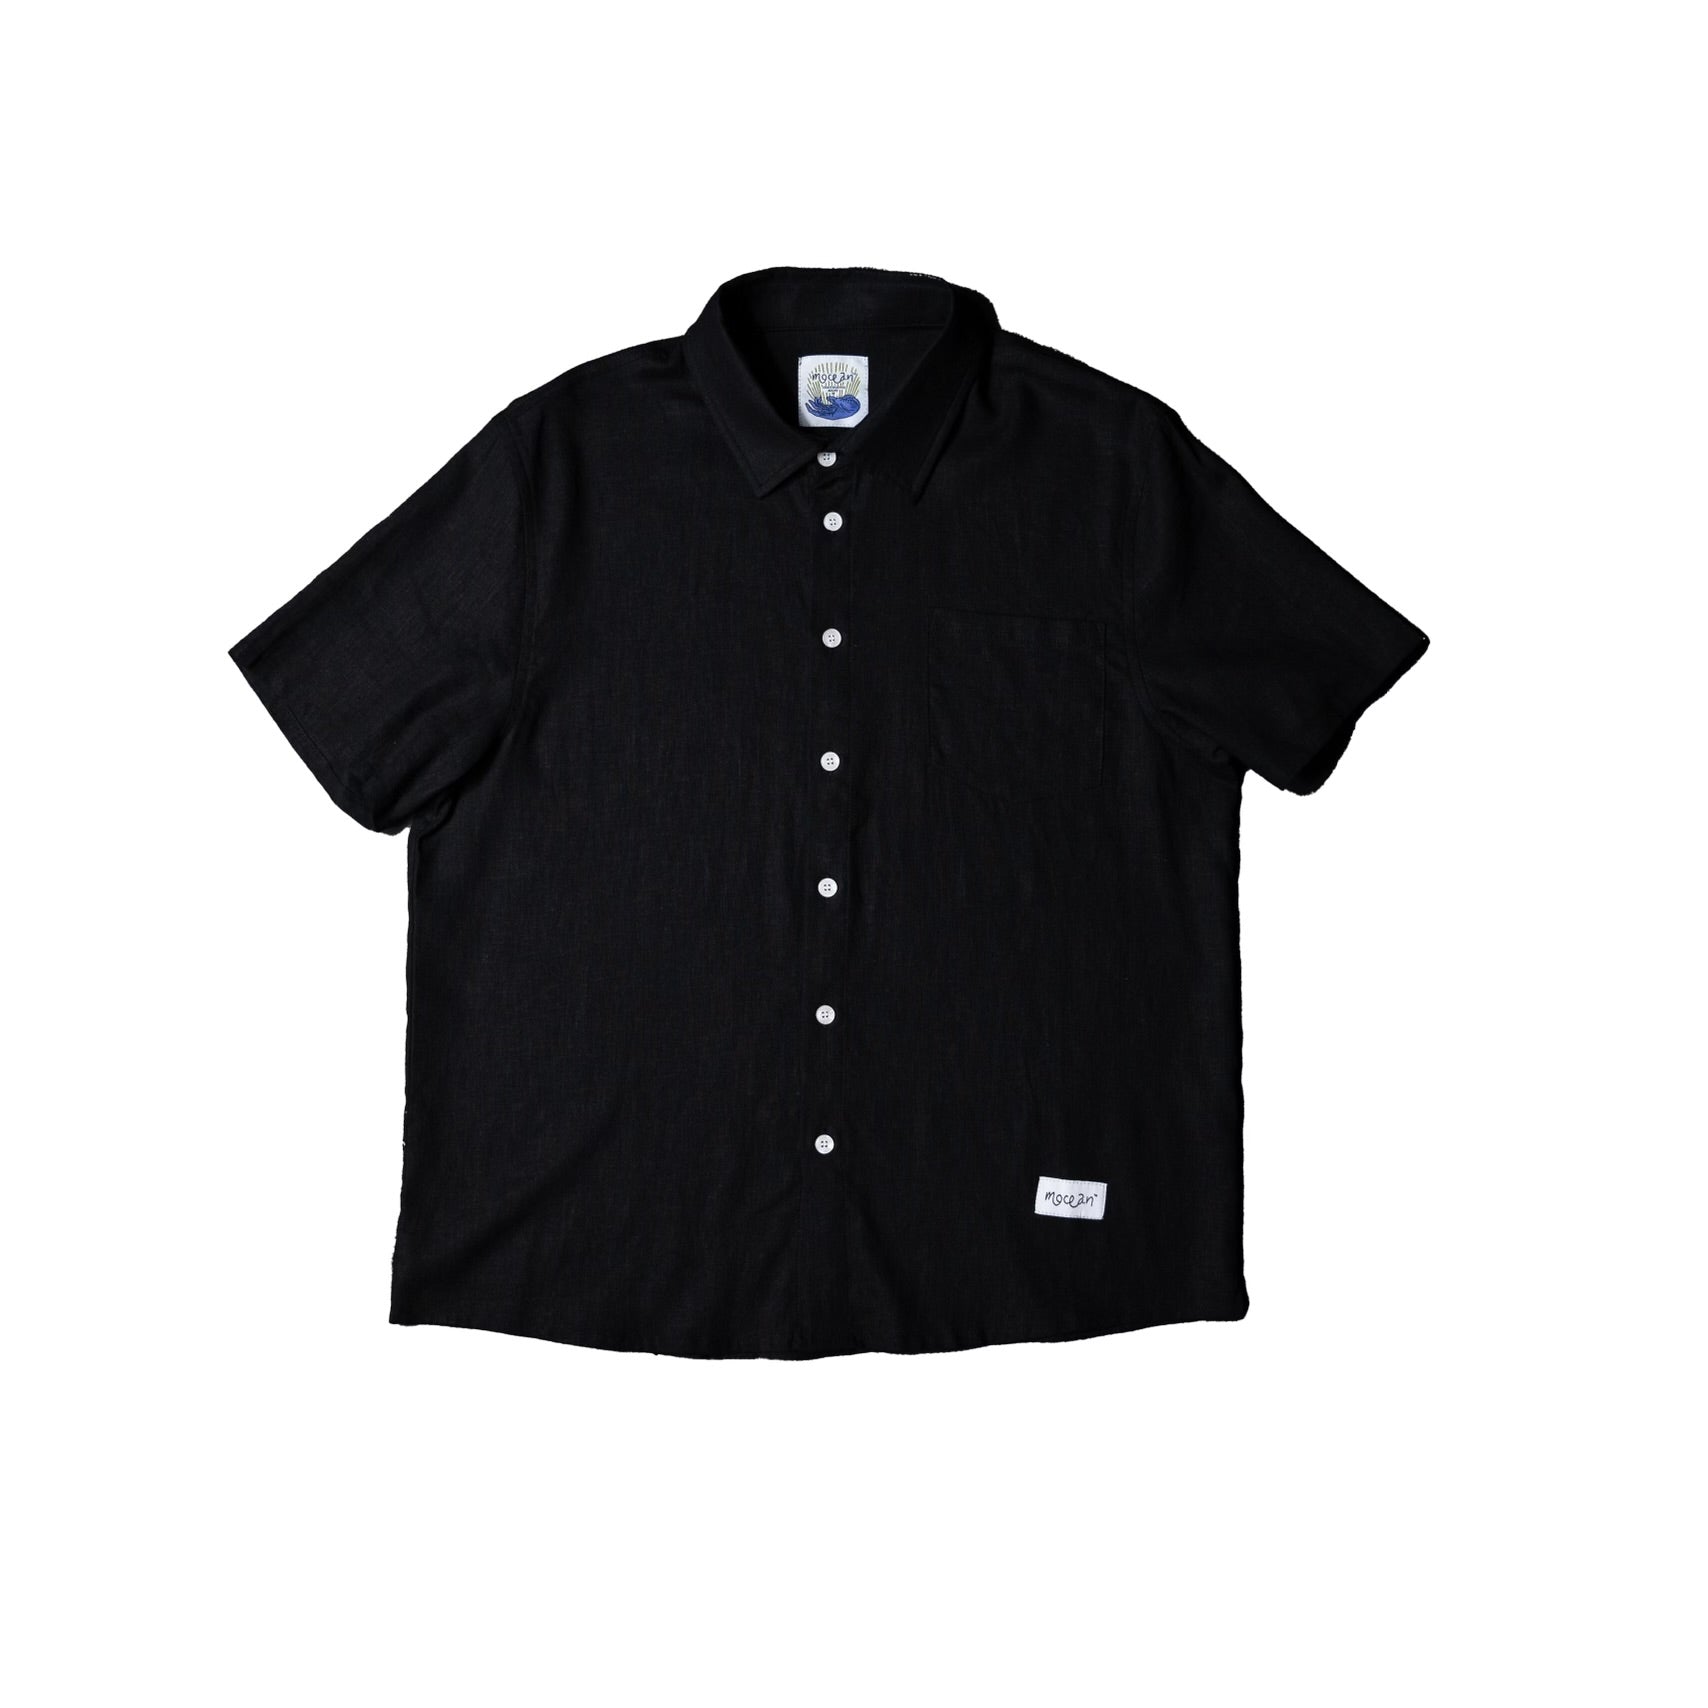 Mocean Black Linen Shirt